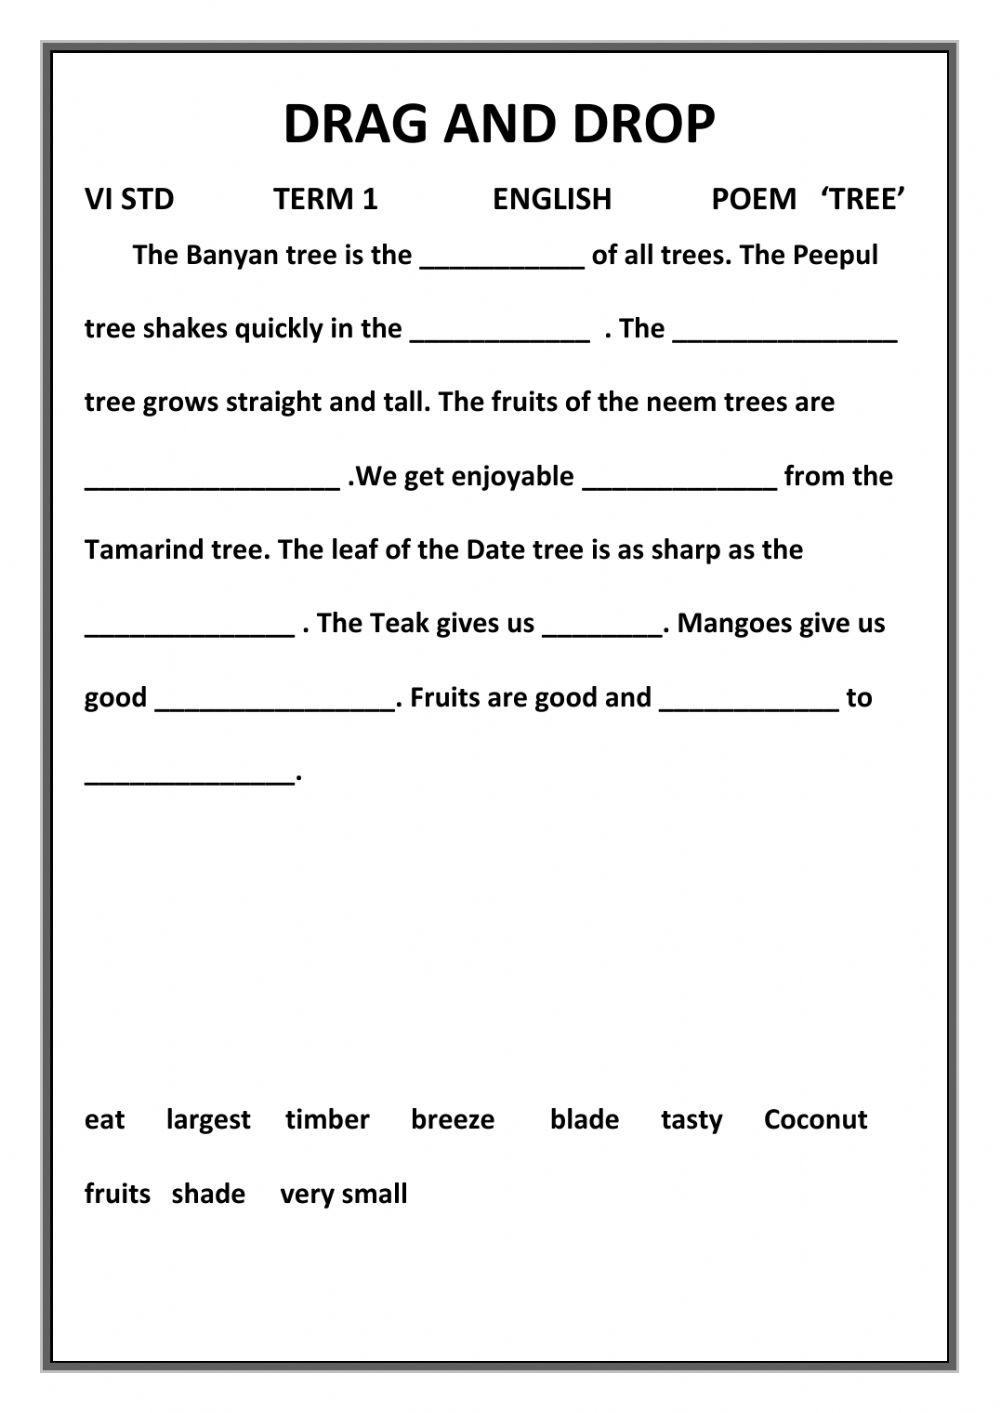 Poem Tree